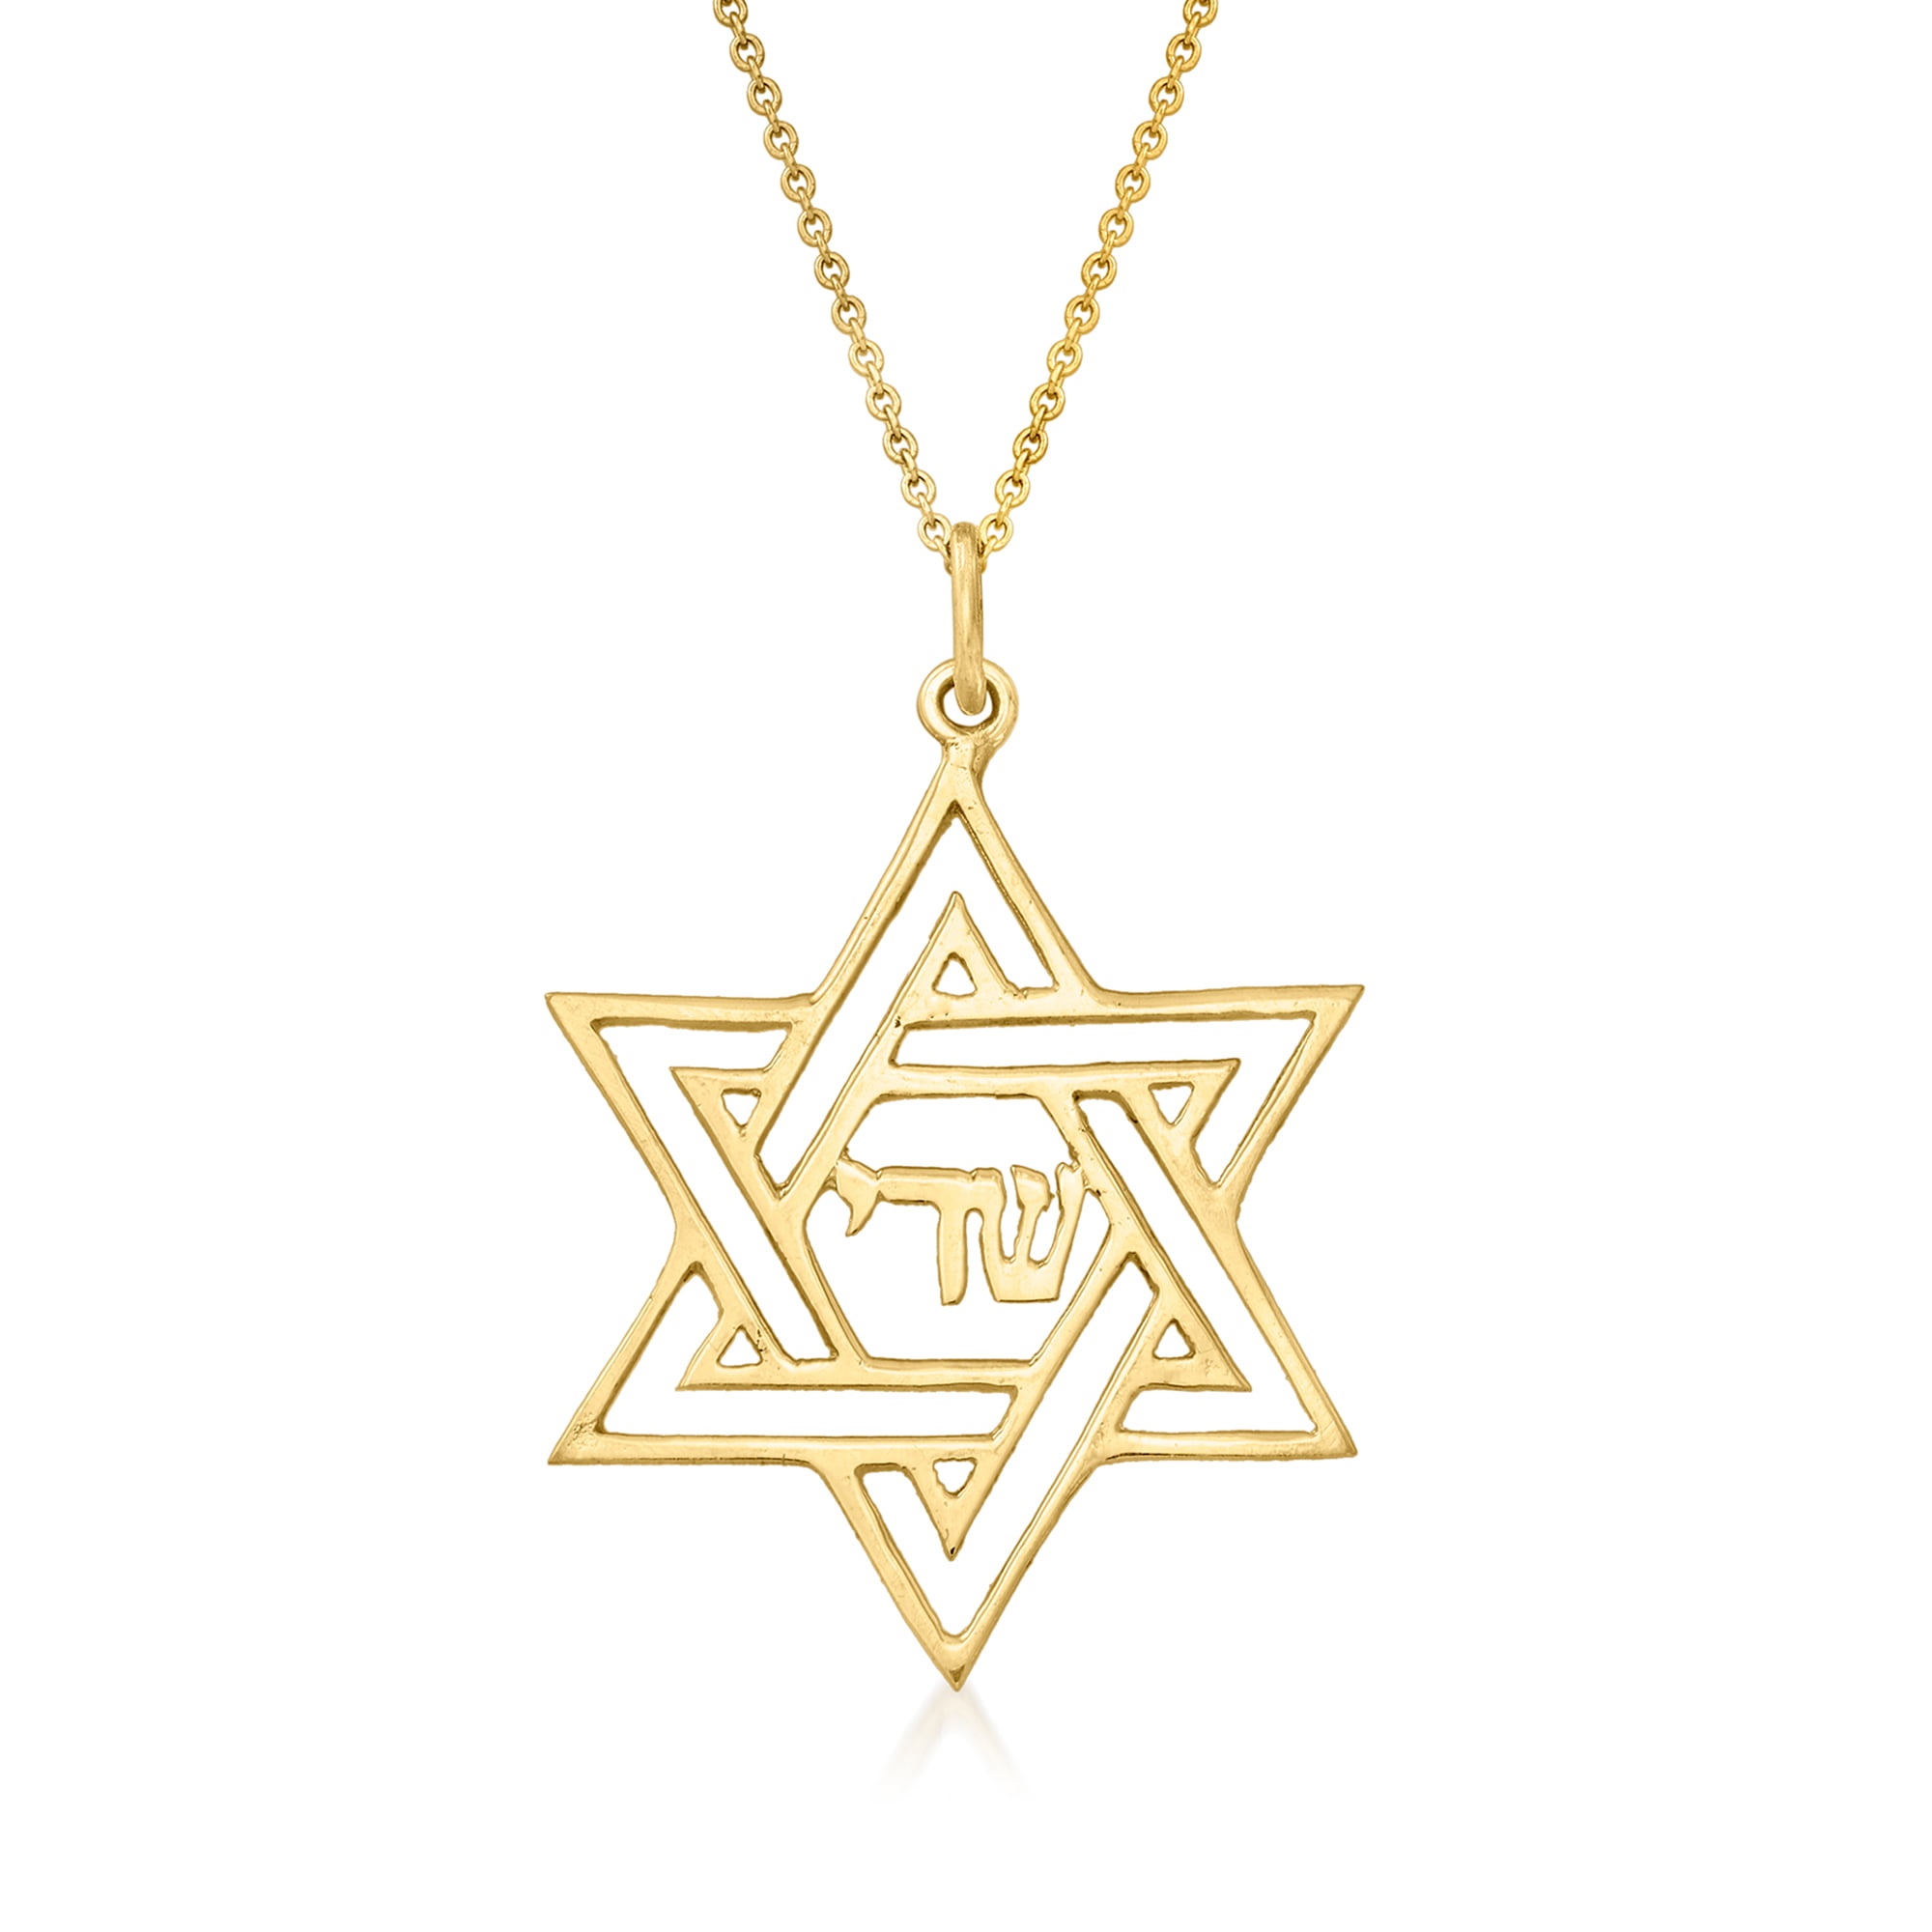 Free Chain Real 14k Yellow Gold Star of David Jewish Vintage Charm Pendant 